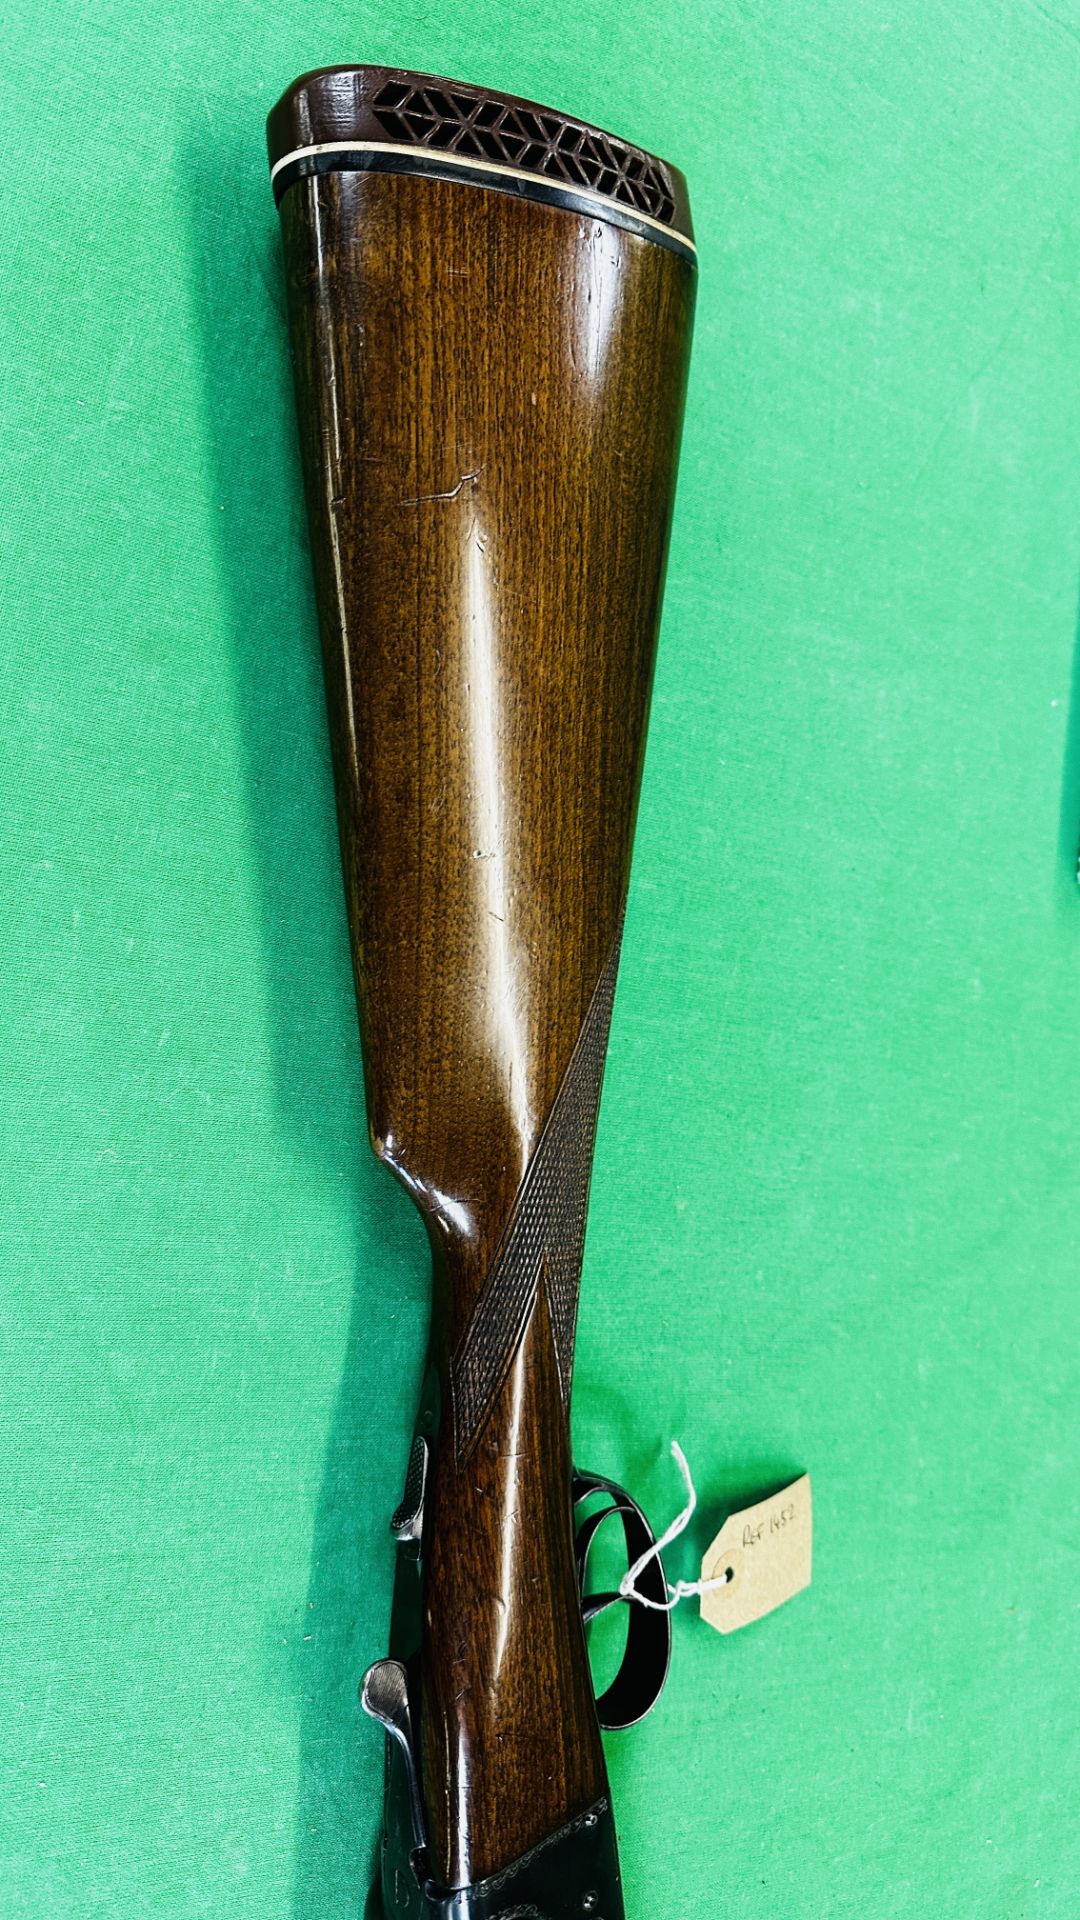 ZABALA 12 GAUGE SIDE BY SIDE SHOTGUN #192092 WITH GREEN PADDED GUN SLEEVE - (REF: 1452) - (ALL GUNS - Image 3 of 16